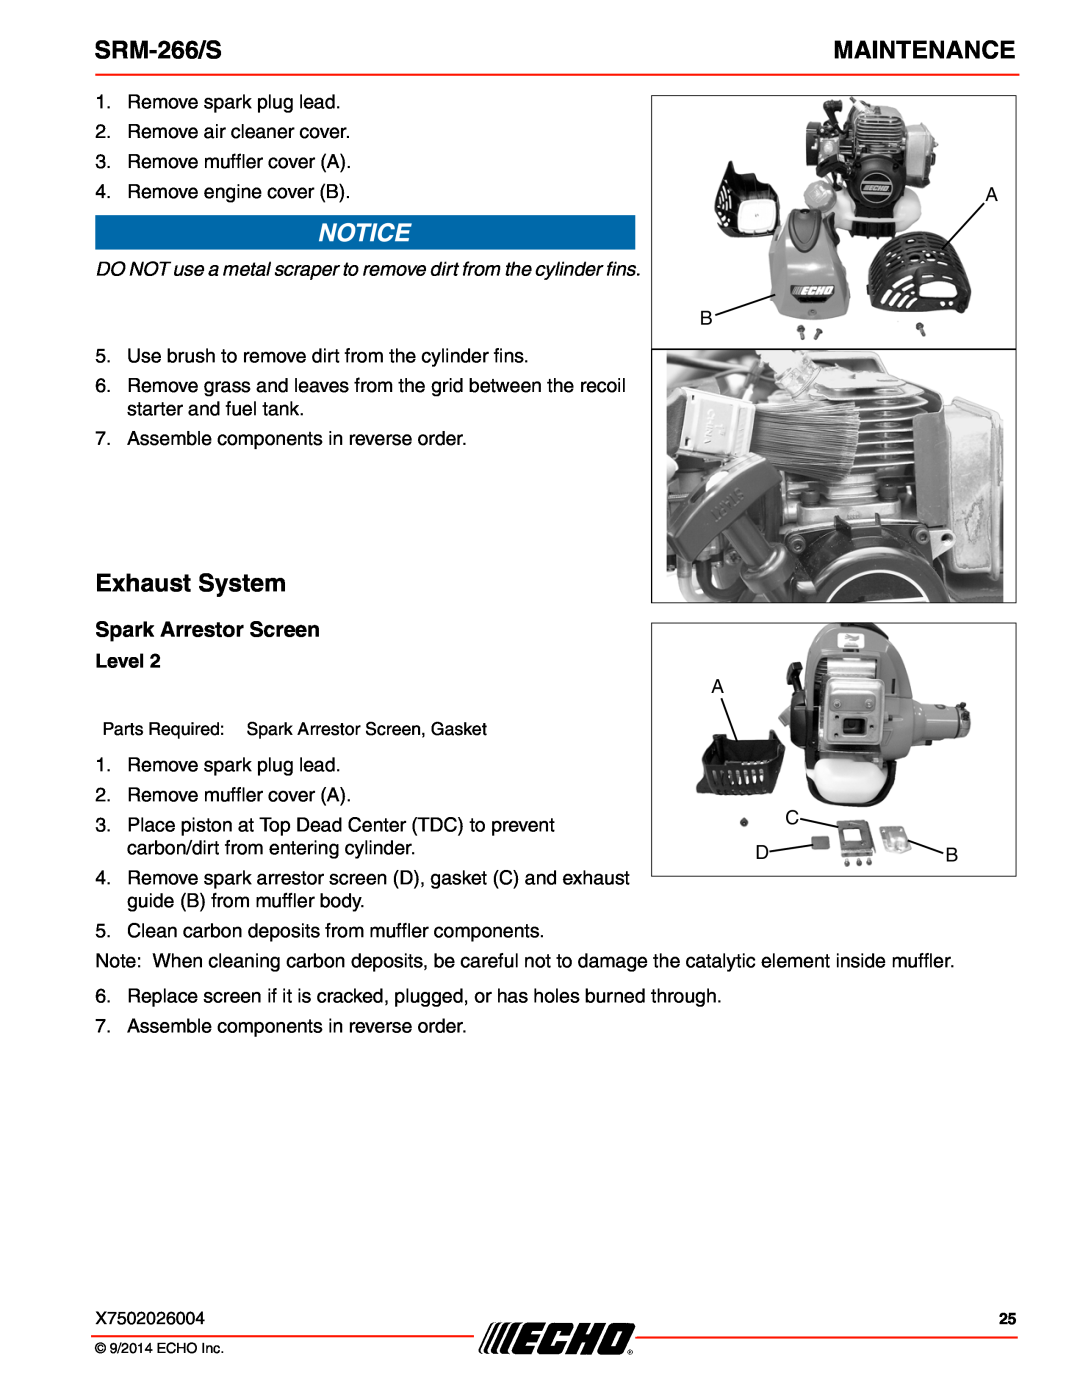 Echo SRM-266/S specifications Exhaust System, Spark Arrestor Screen, Maintenance 